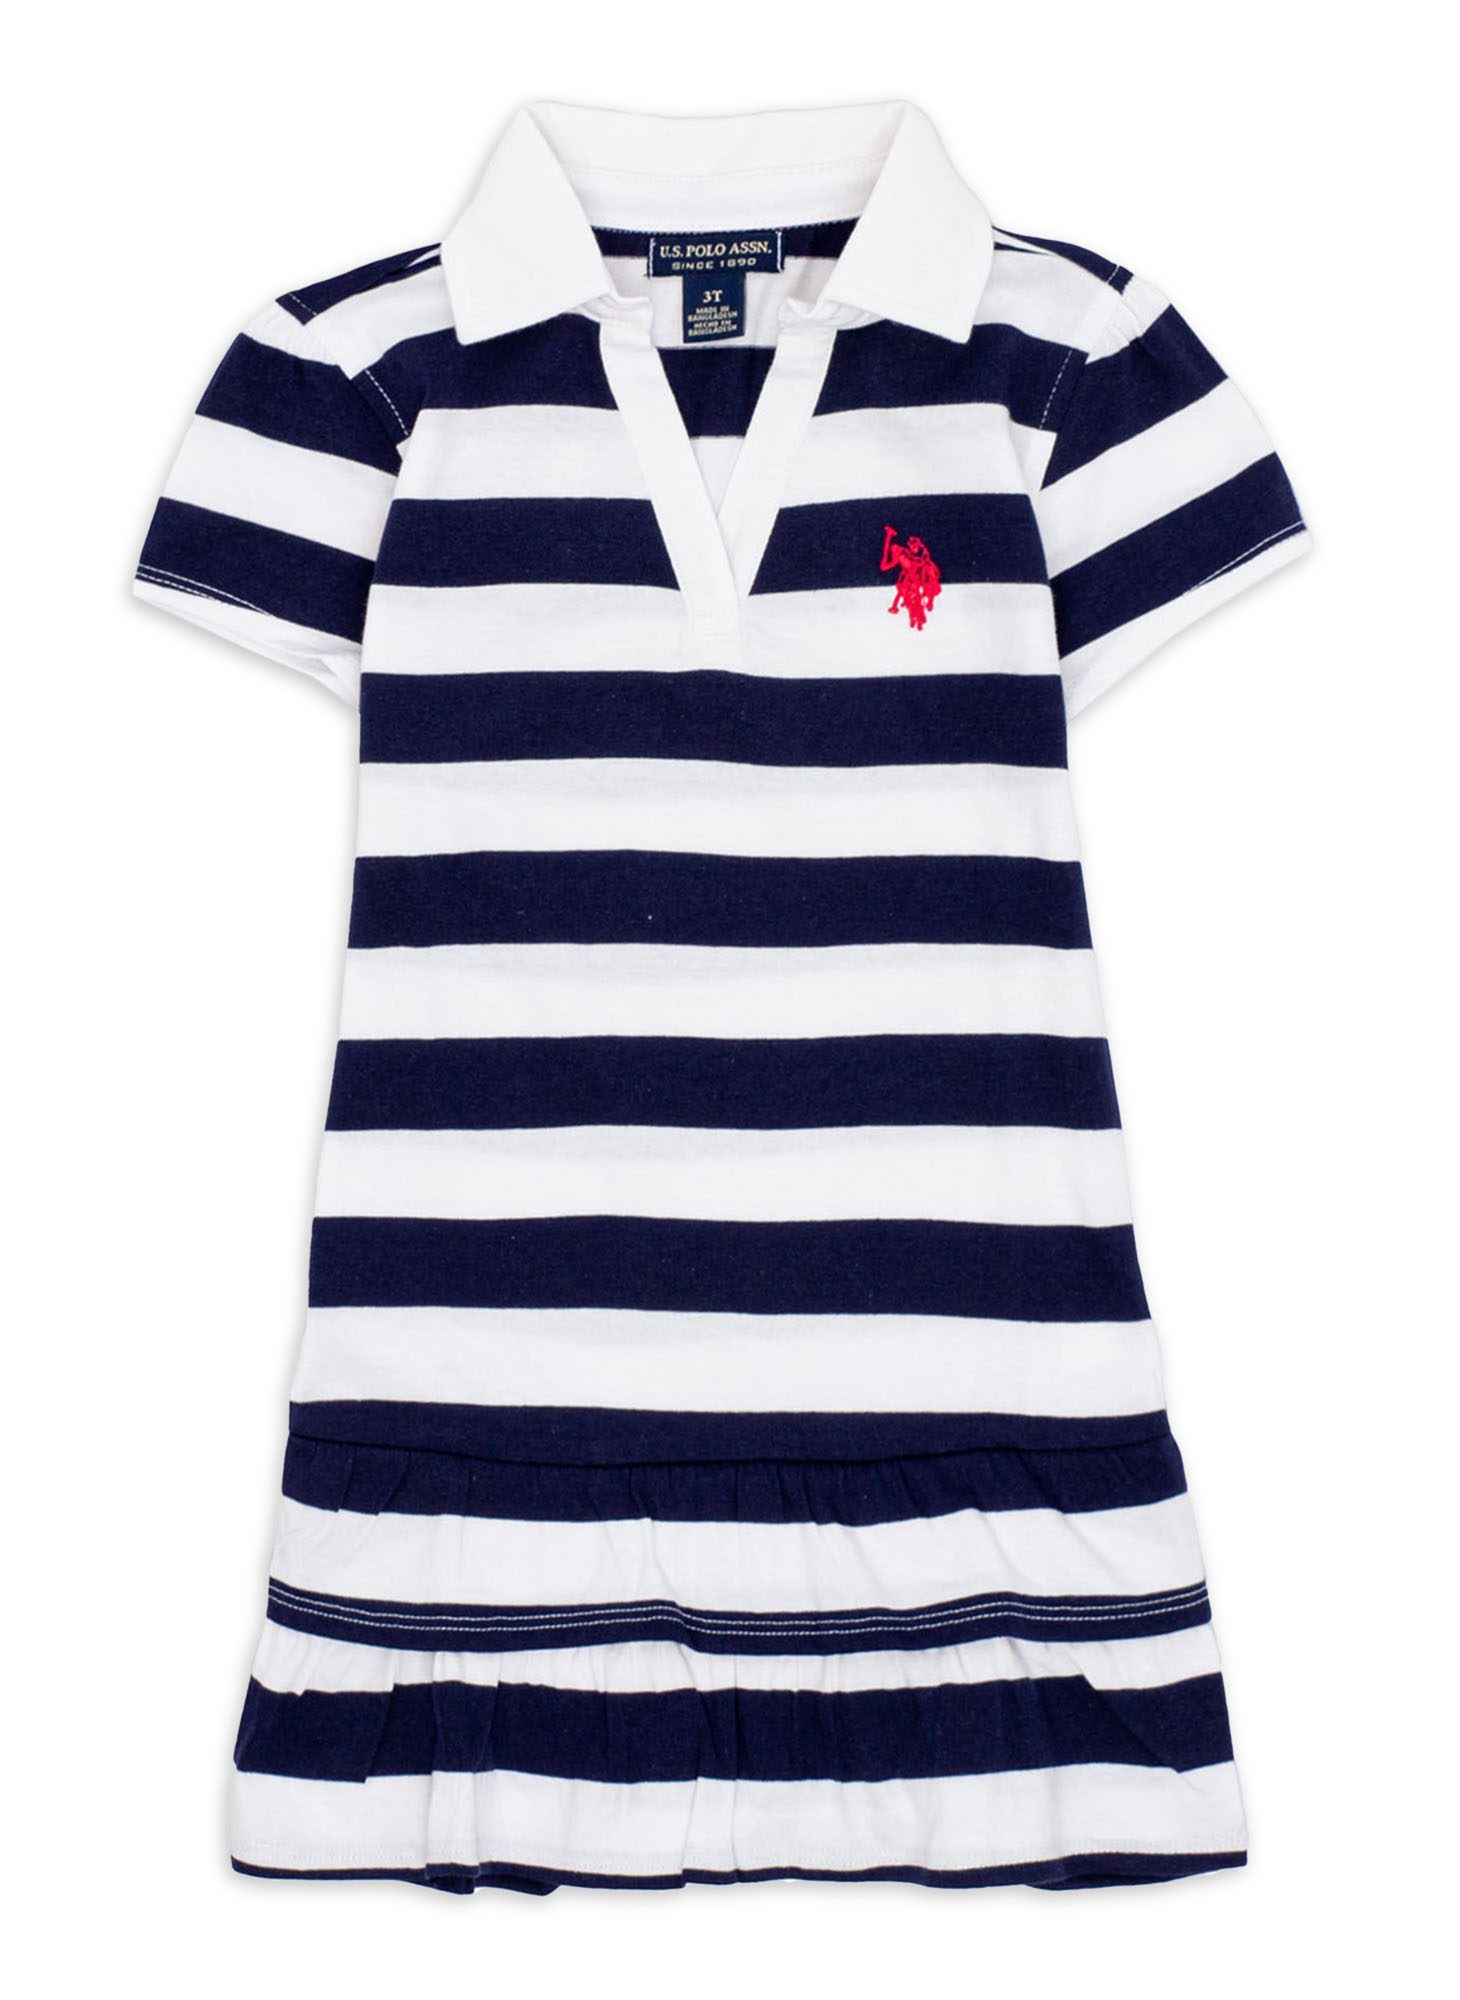 U.S. Polo Assn. Toddler Girl Stripe Ruffle Dress